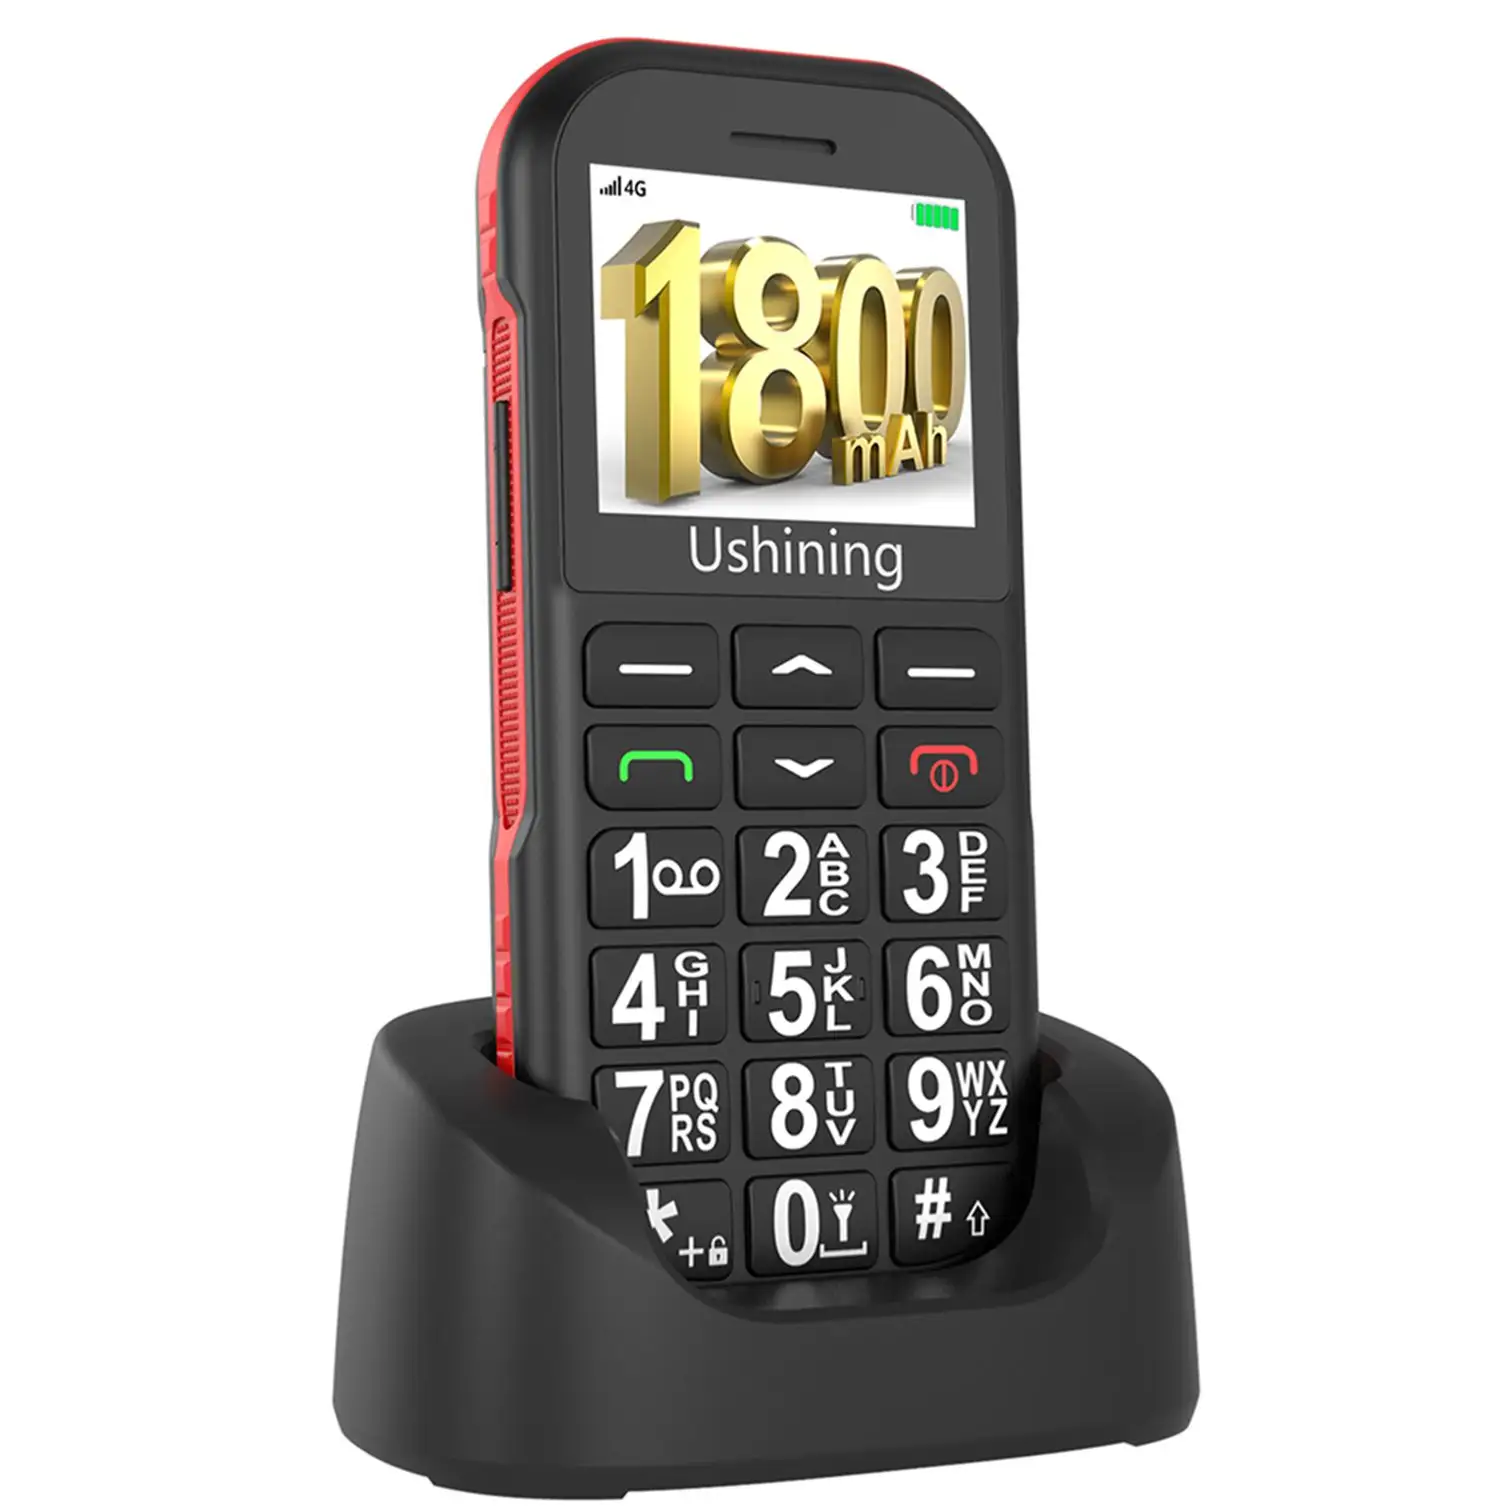 Teléfono móvil para personas mayores de origen superventas 4G Batería grande botón grande teléfono celular con pantalla de 1,8 pulgadas con botón SOS para personas mayores